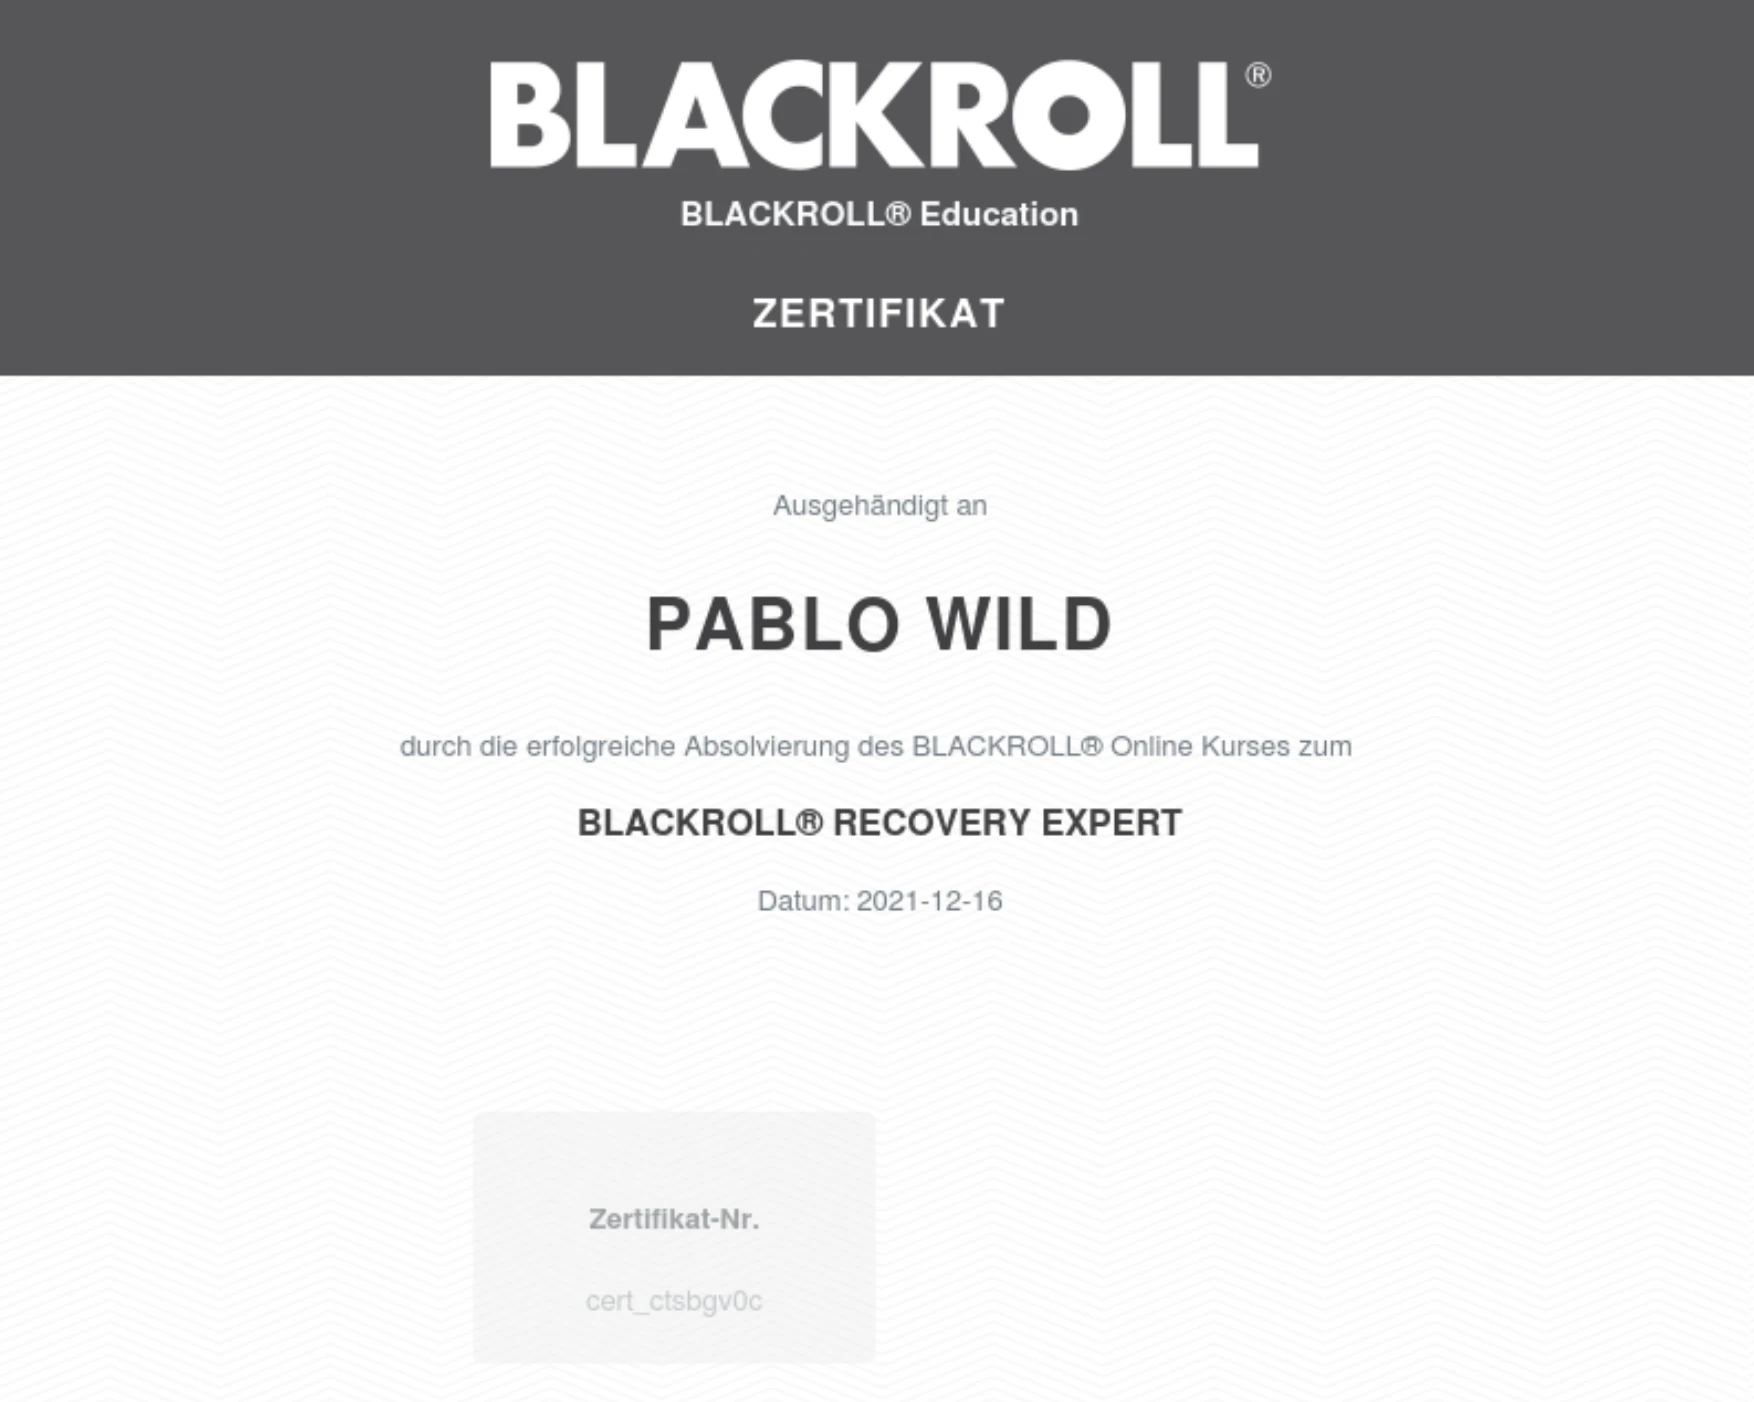 Pablo Wild - BLACKROLL® Recovery Expert Zertifikat